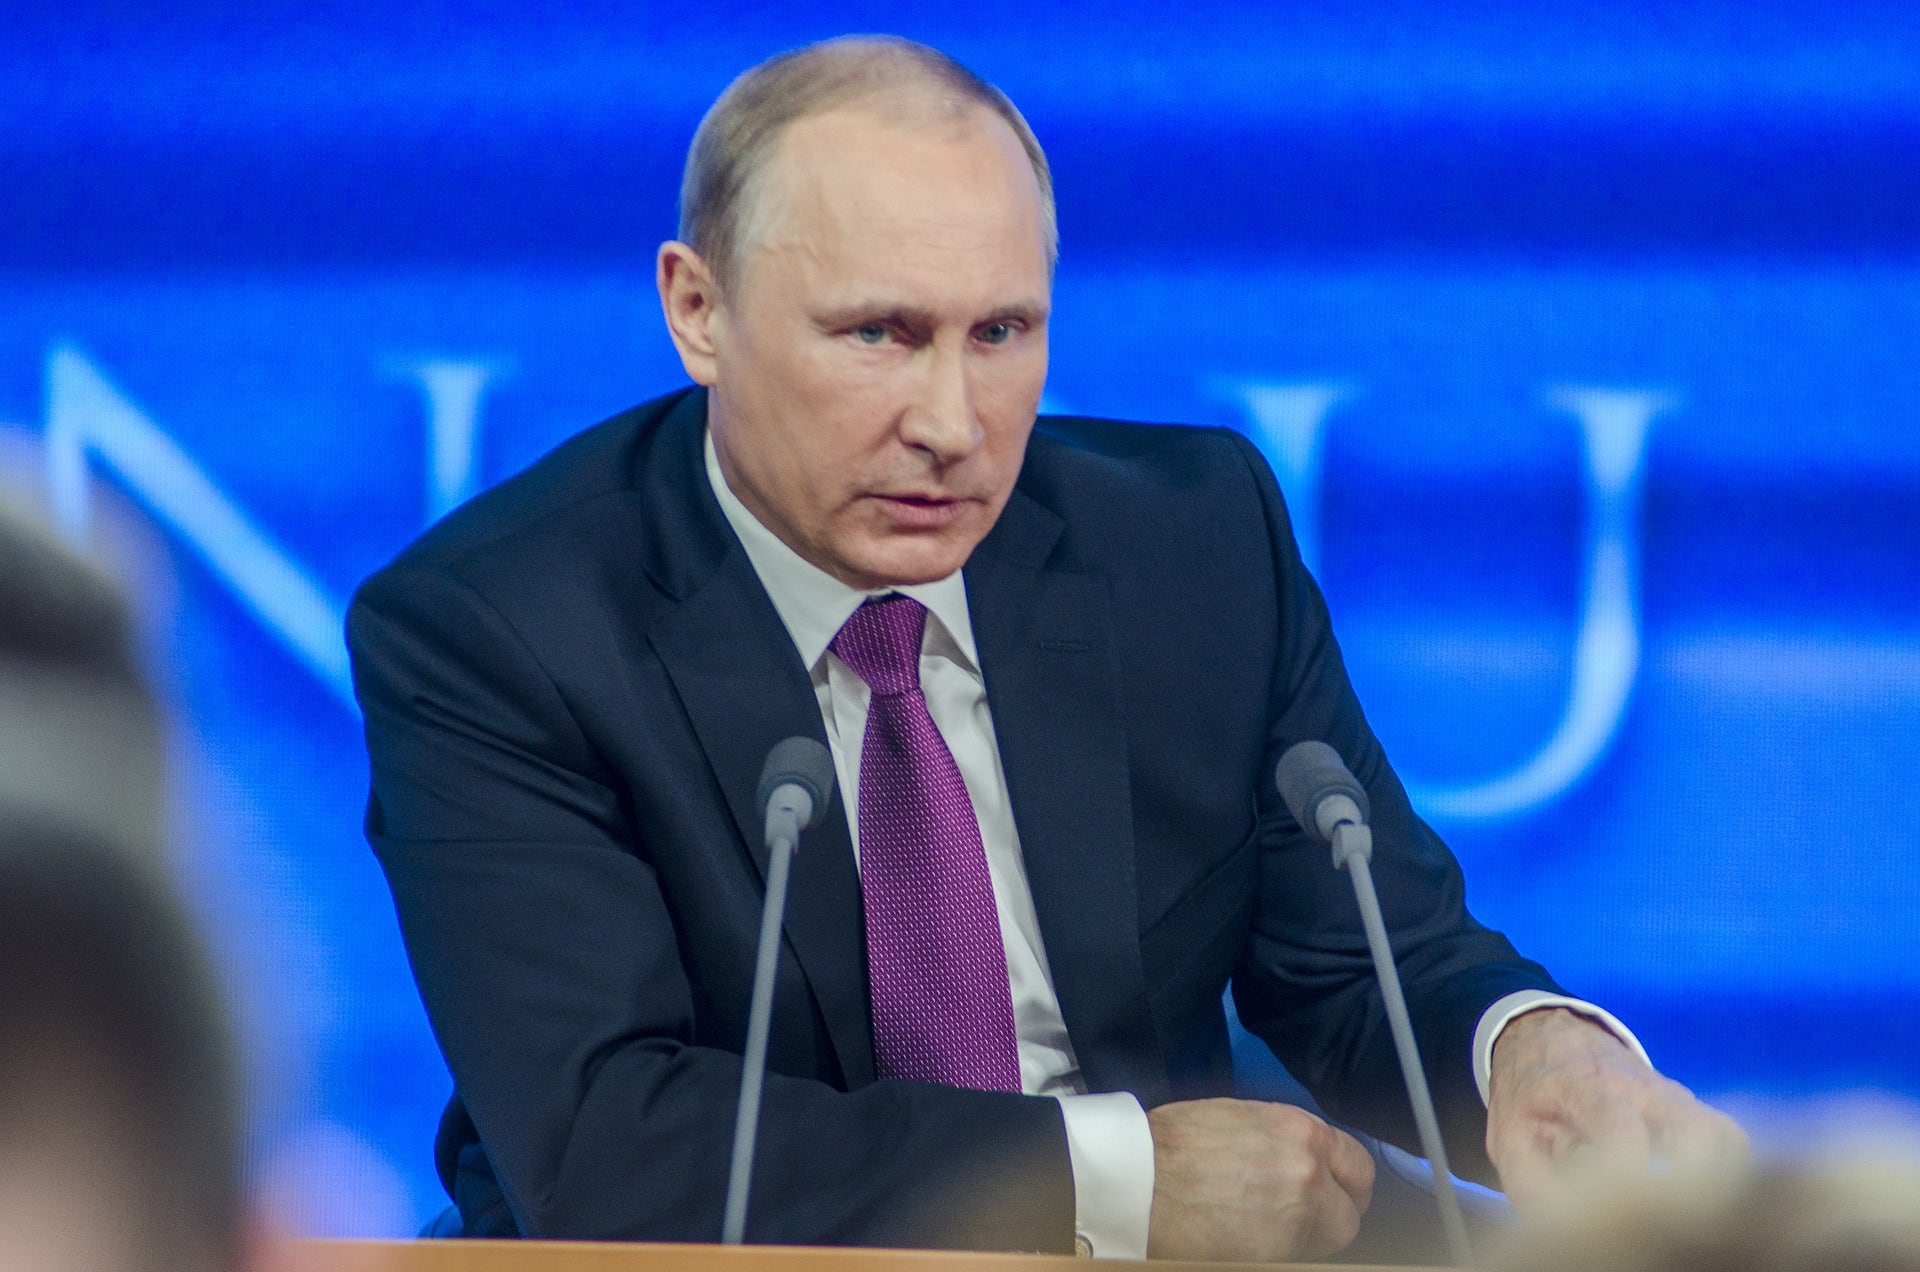 U.S. Politicians Are Clearly Pro-Putin, Financier Says